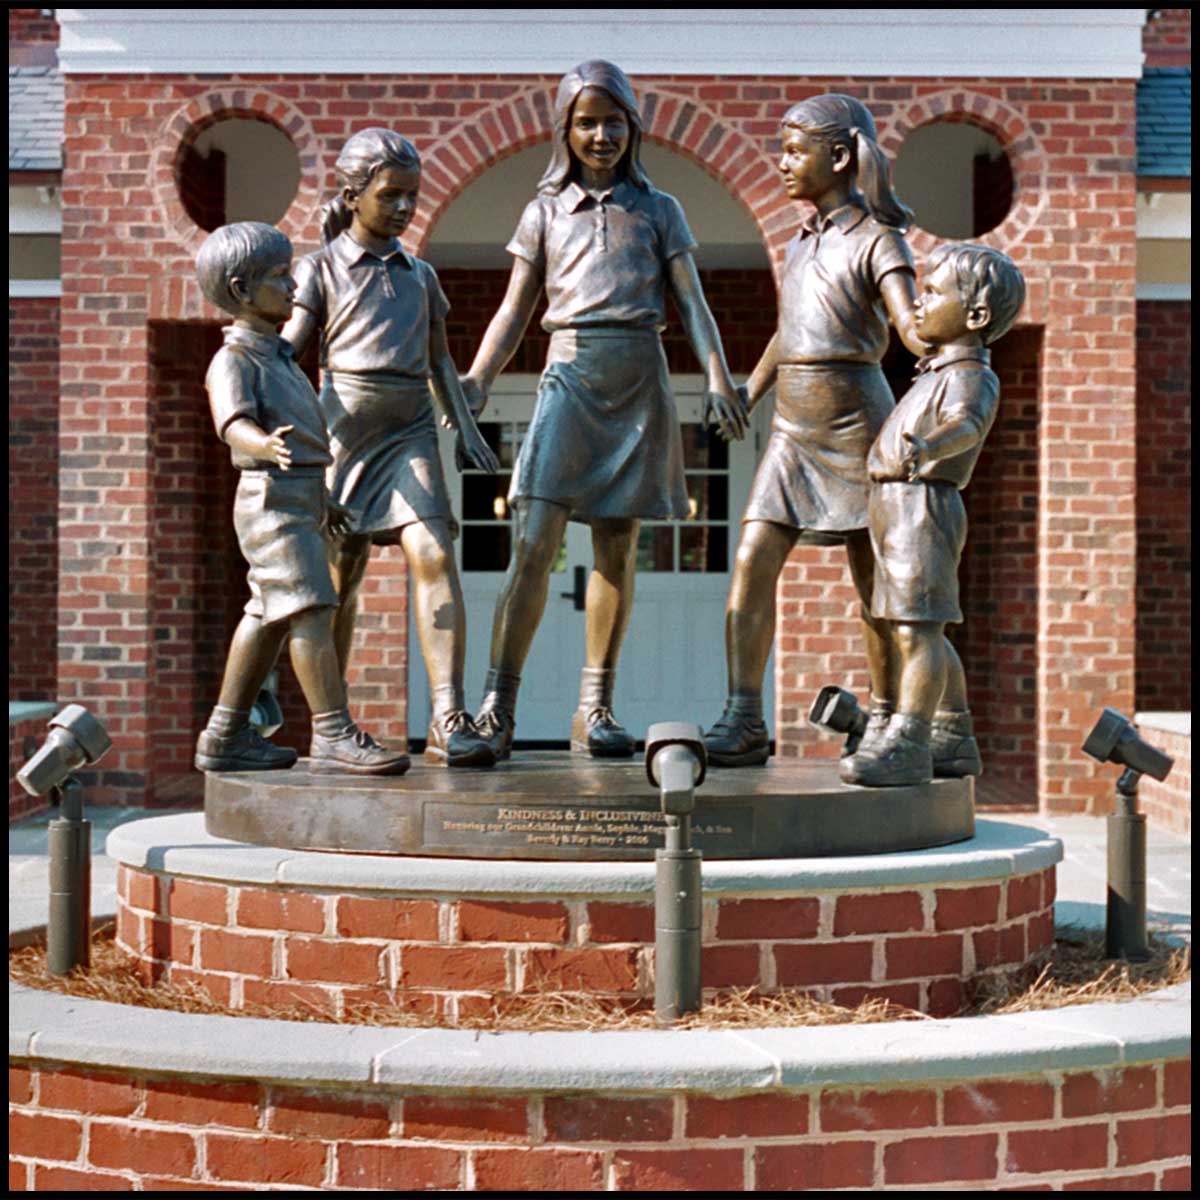 photo of bronze sculpture of five children standing in half circle holding hands atop brick-faced pedestal